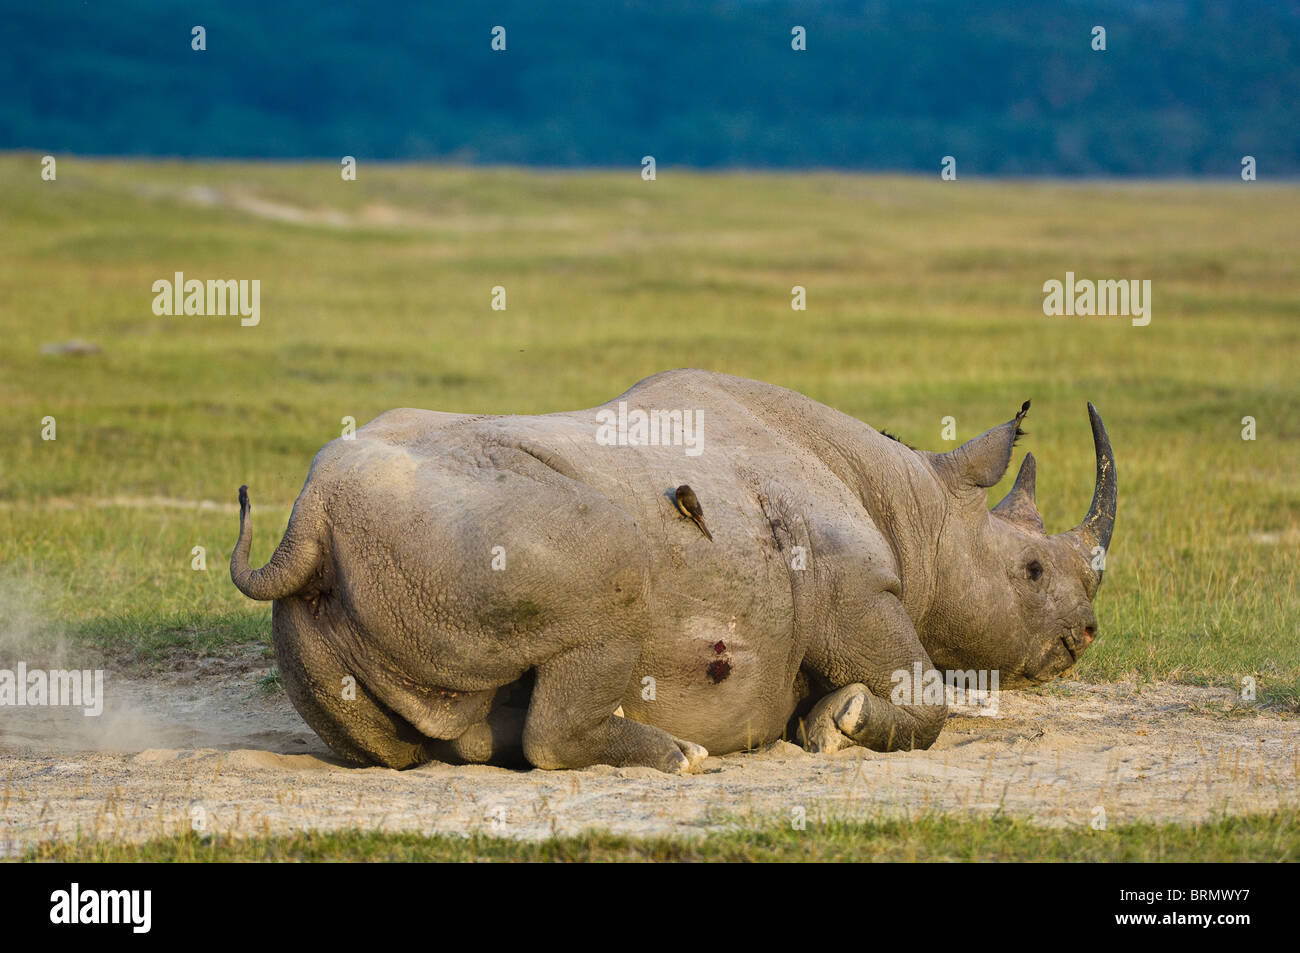 Black rhinoceros (Diceros bicornis michaeli) East African sub-species dust bathing. Stock Photo